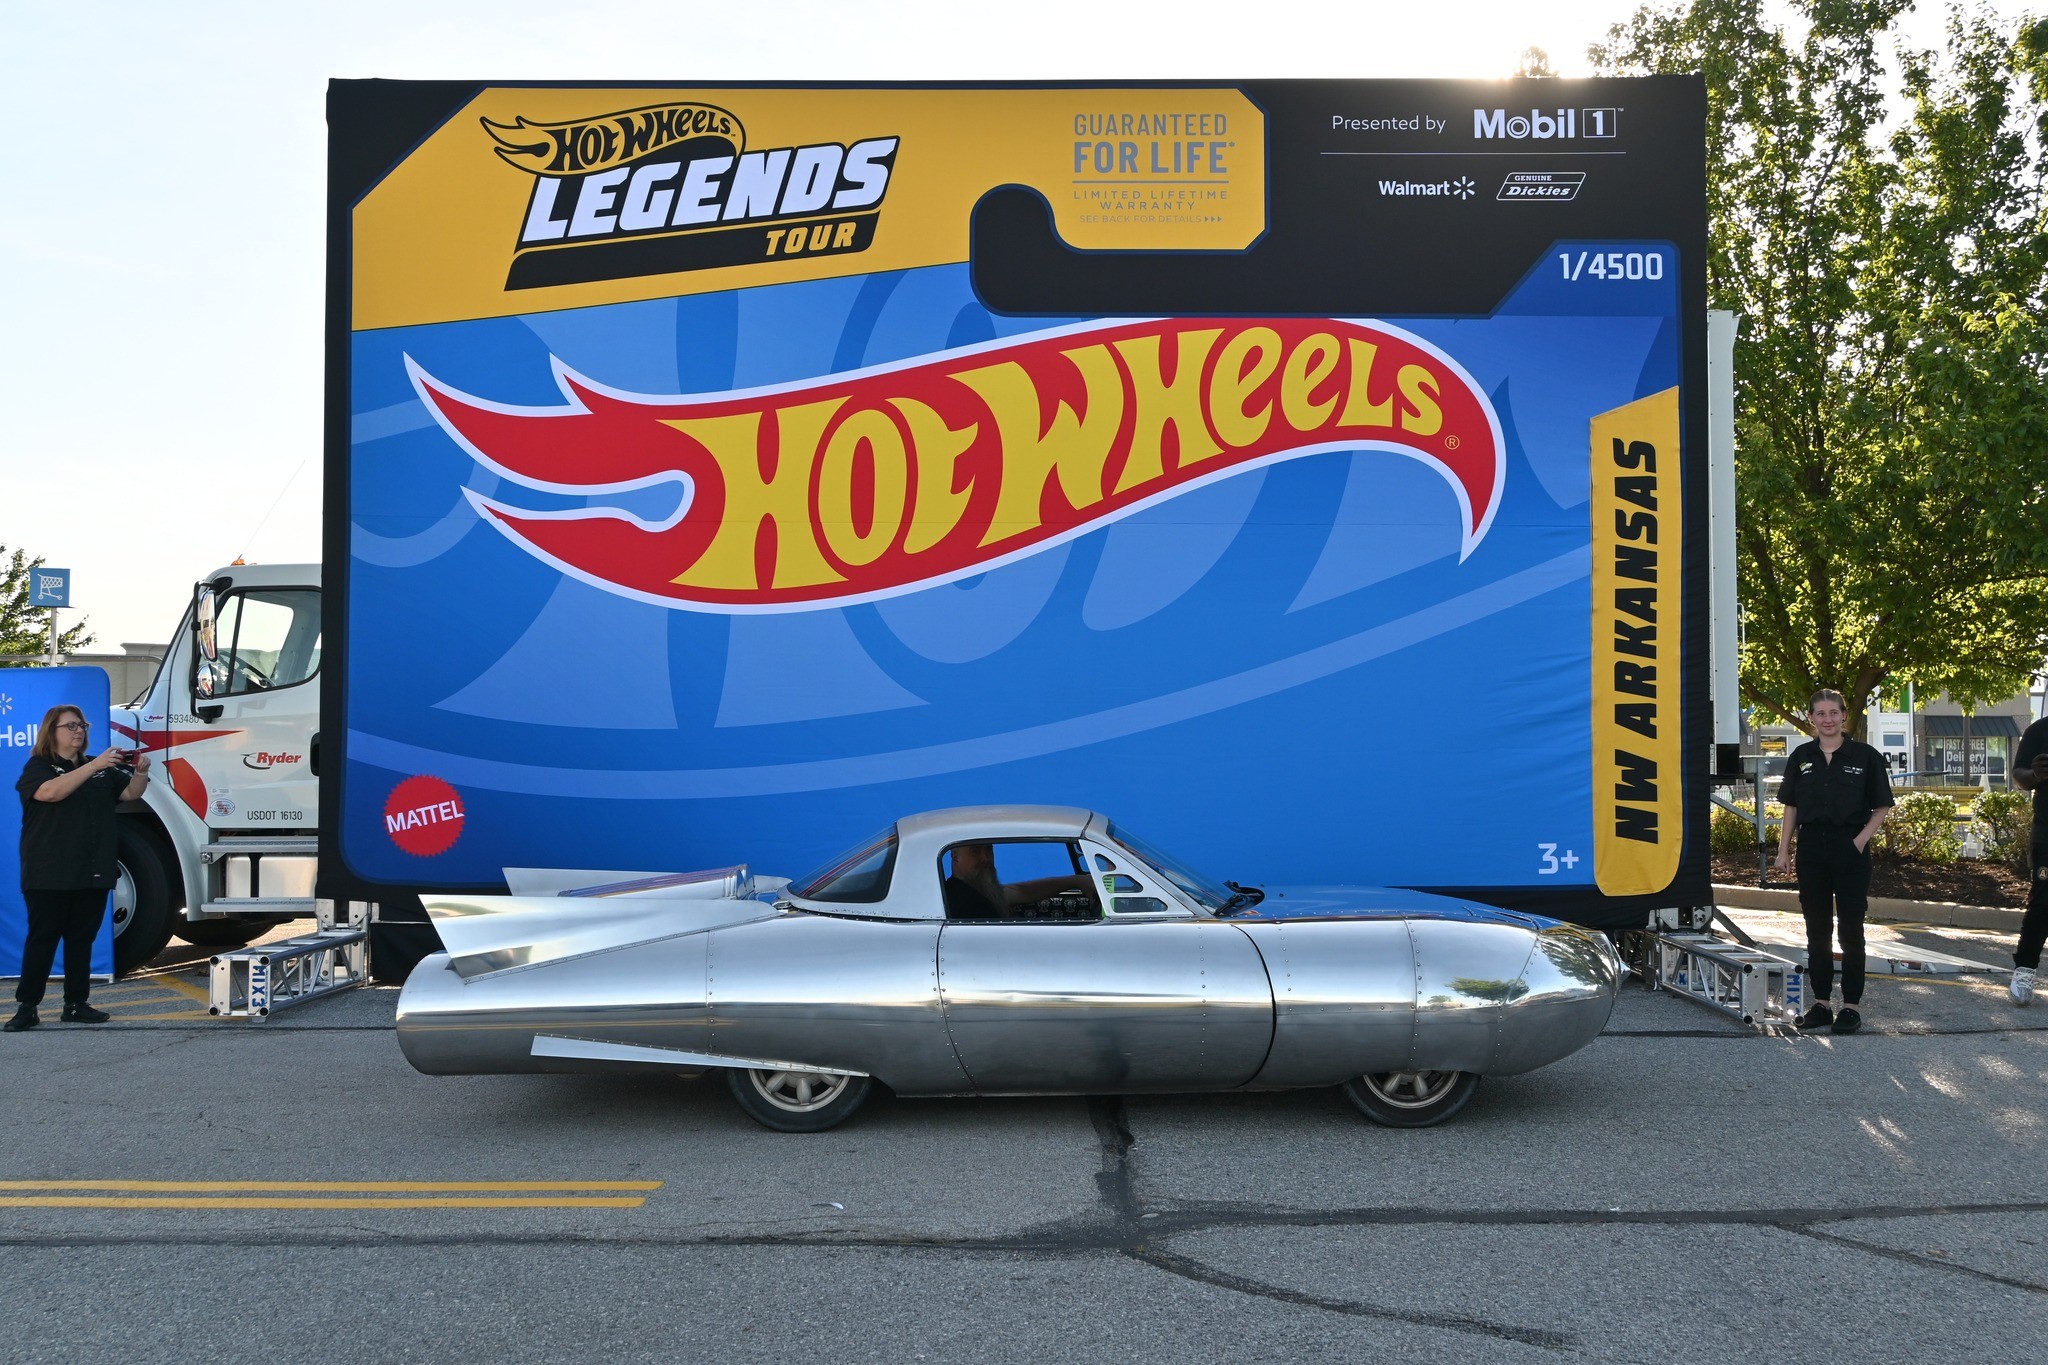 2022 Hot Wheels Legends Tour Is in Full Swing, Big Winner Yet to Be